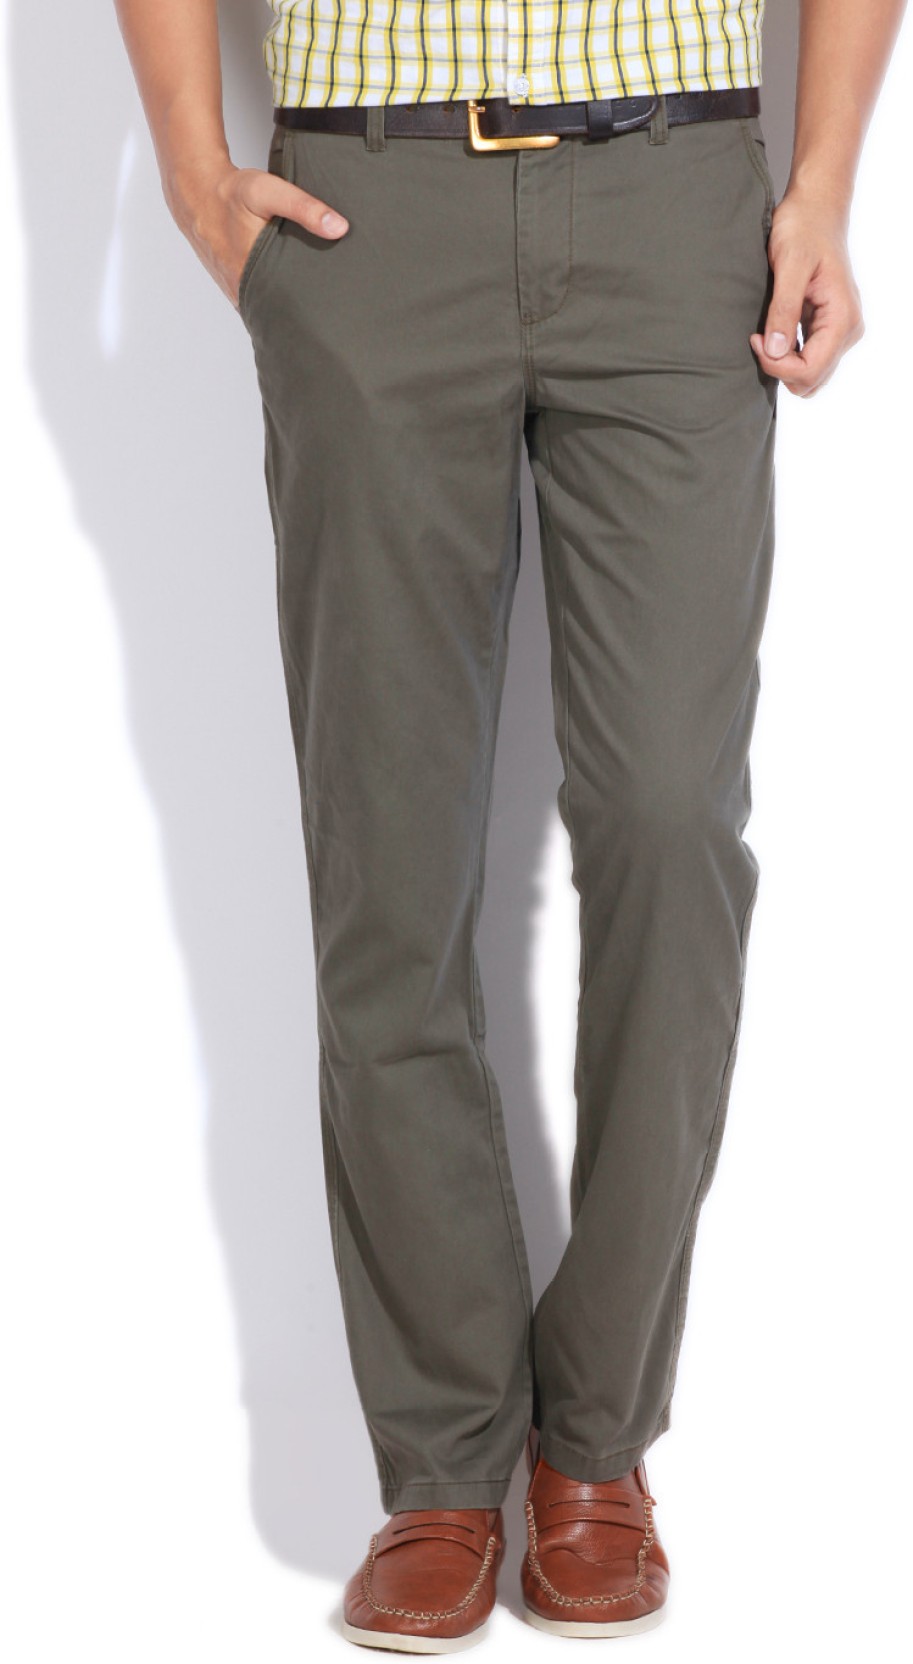 Ruggers Slim Fit Men's Grey Trousers - Buy GREY Ruggers Slim Fit Men's ...